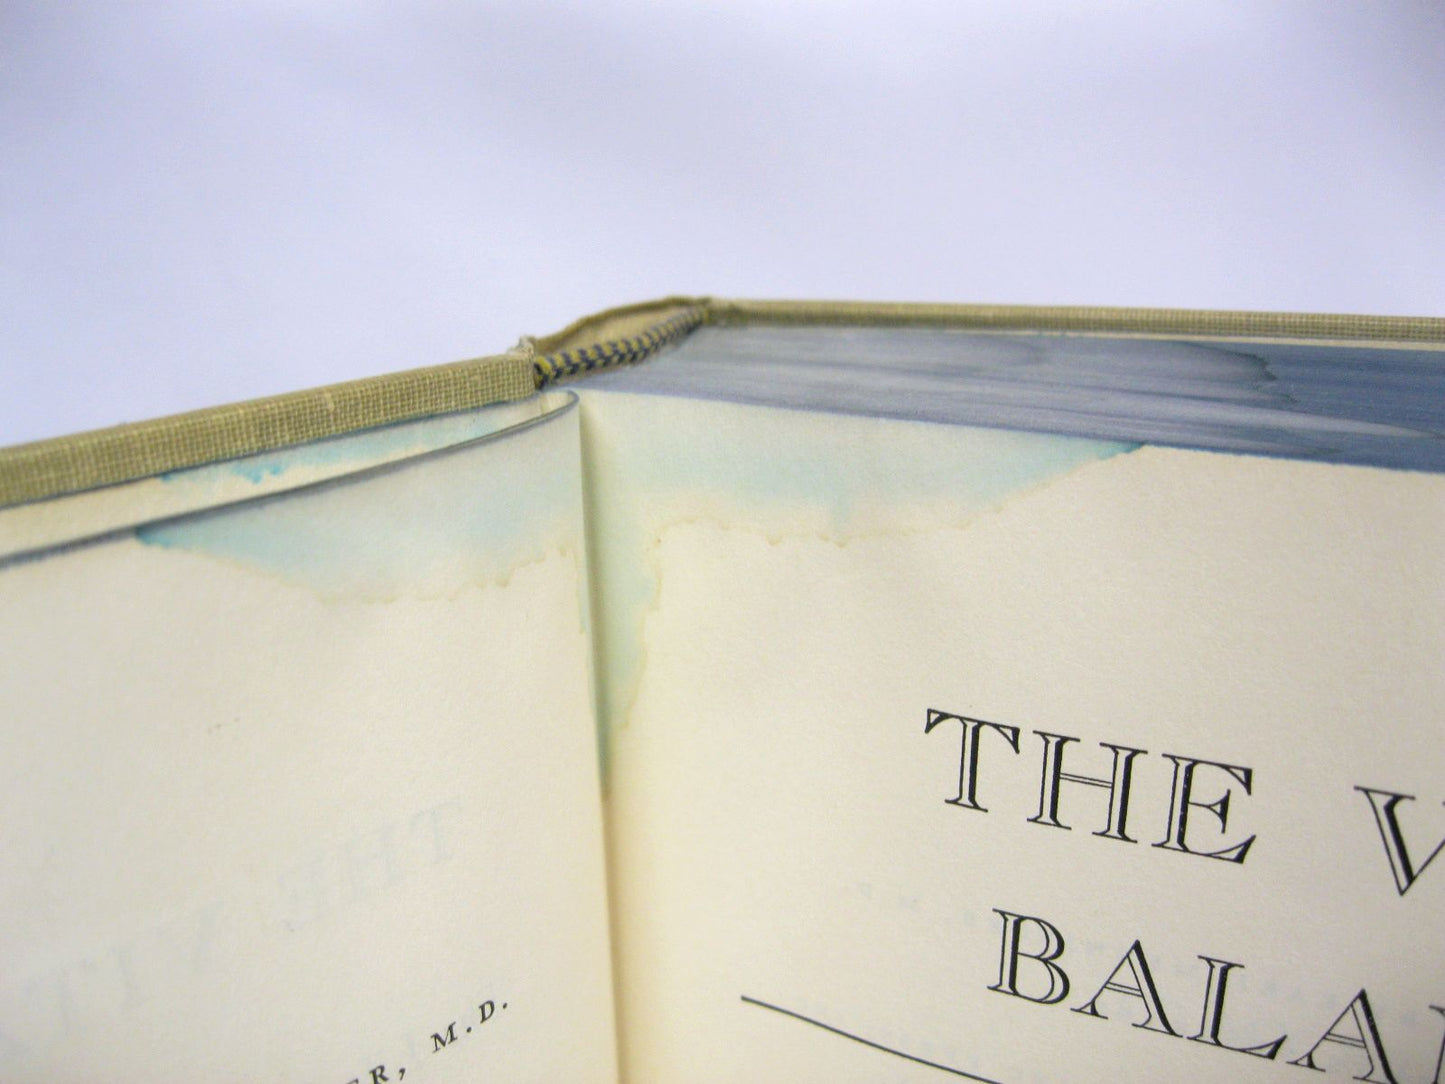 The Vital Balance by Karl A. Menninger